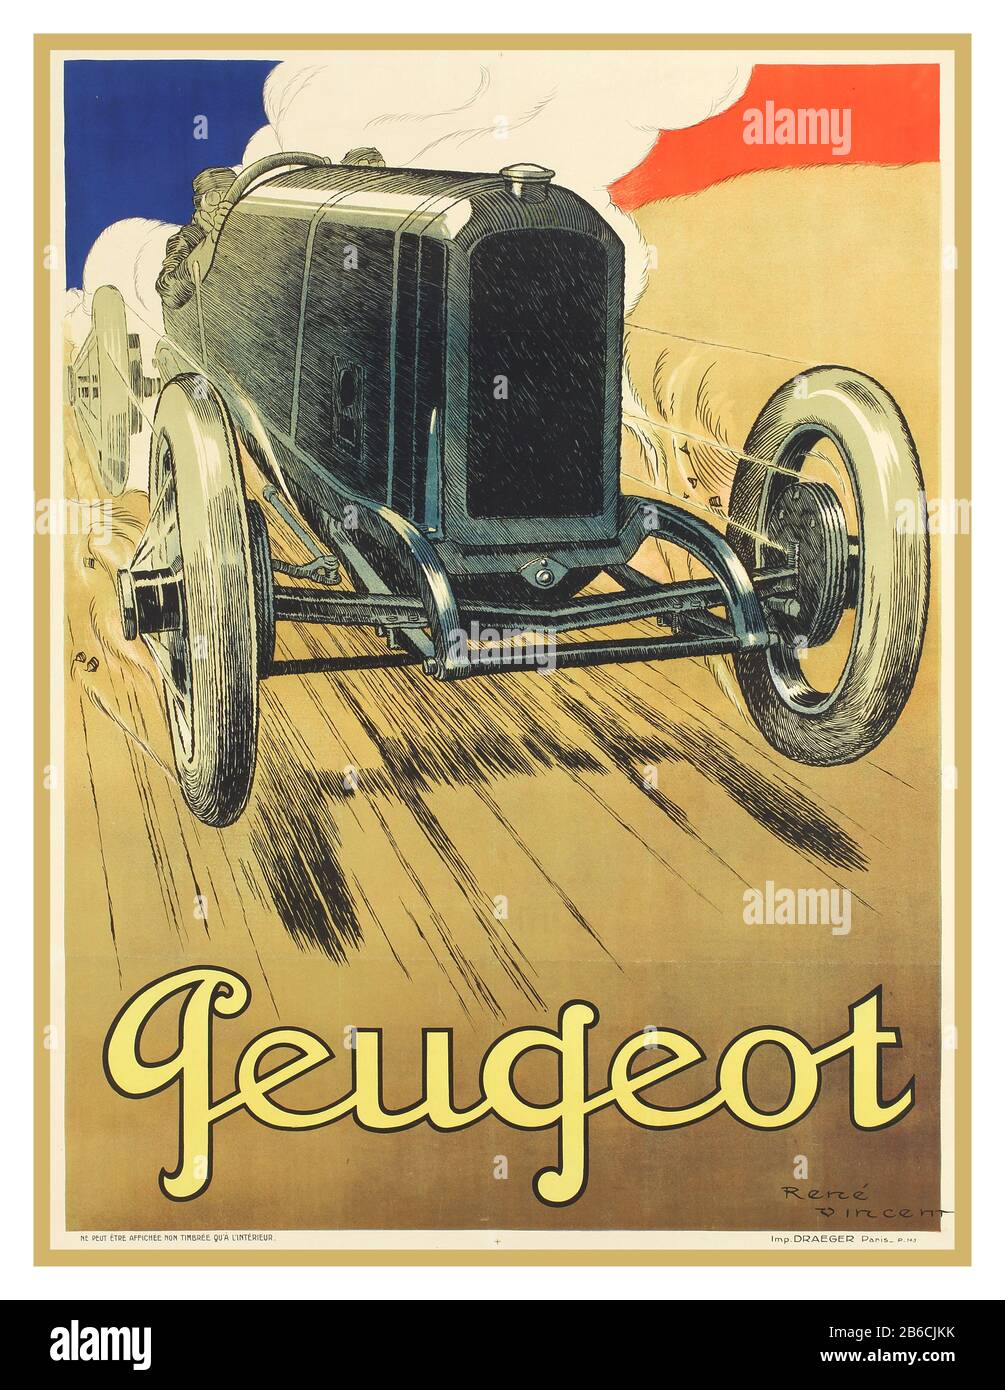 ADLER Automobile Oldtimer Reprint farbig Plakat